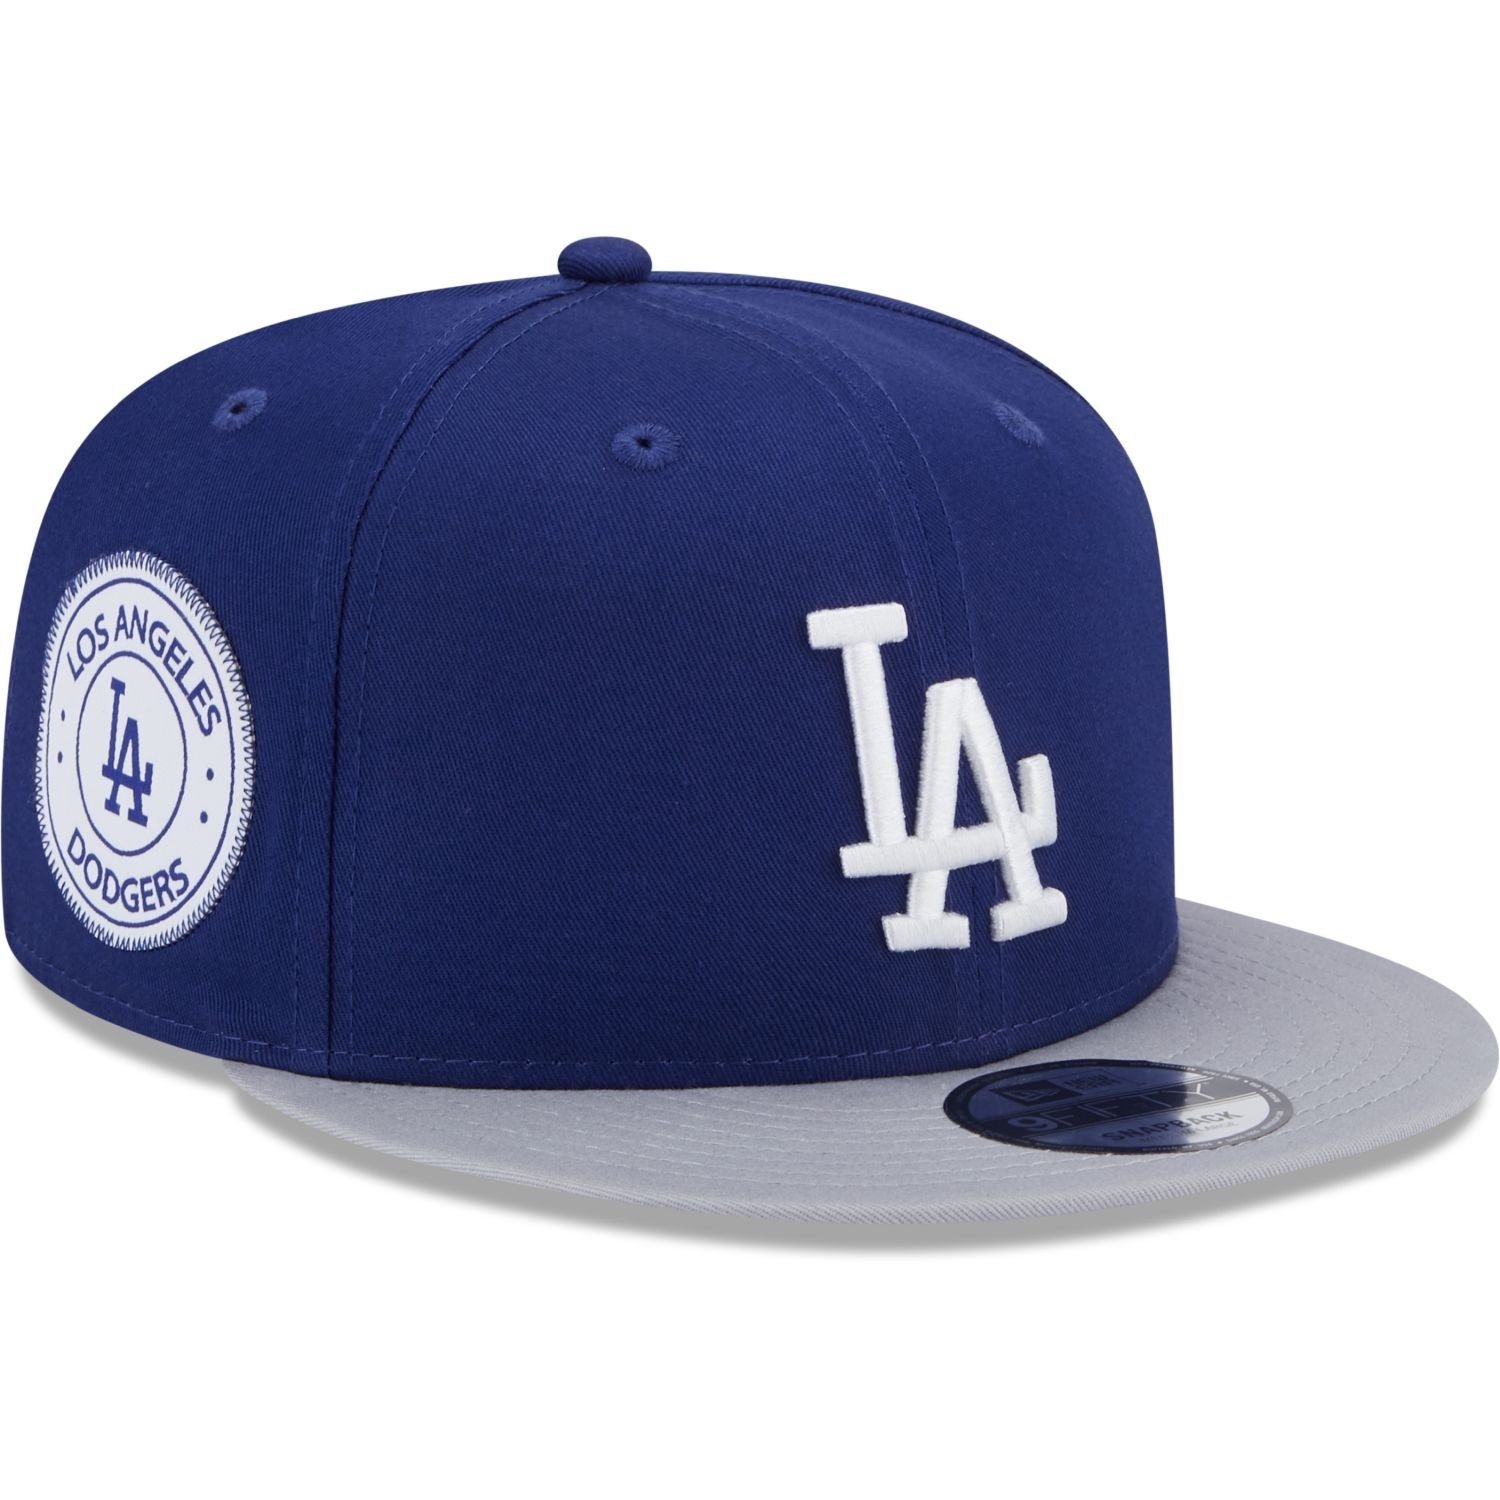 New Era Snapback Cap 9Fifty SIDEPATCH Los Angeles Dodgers | Snapback Caps